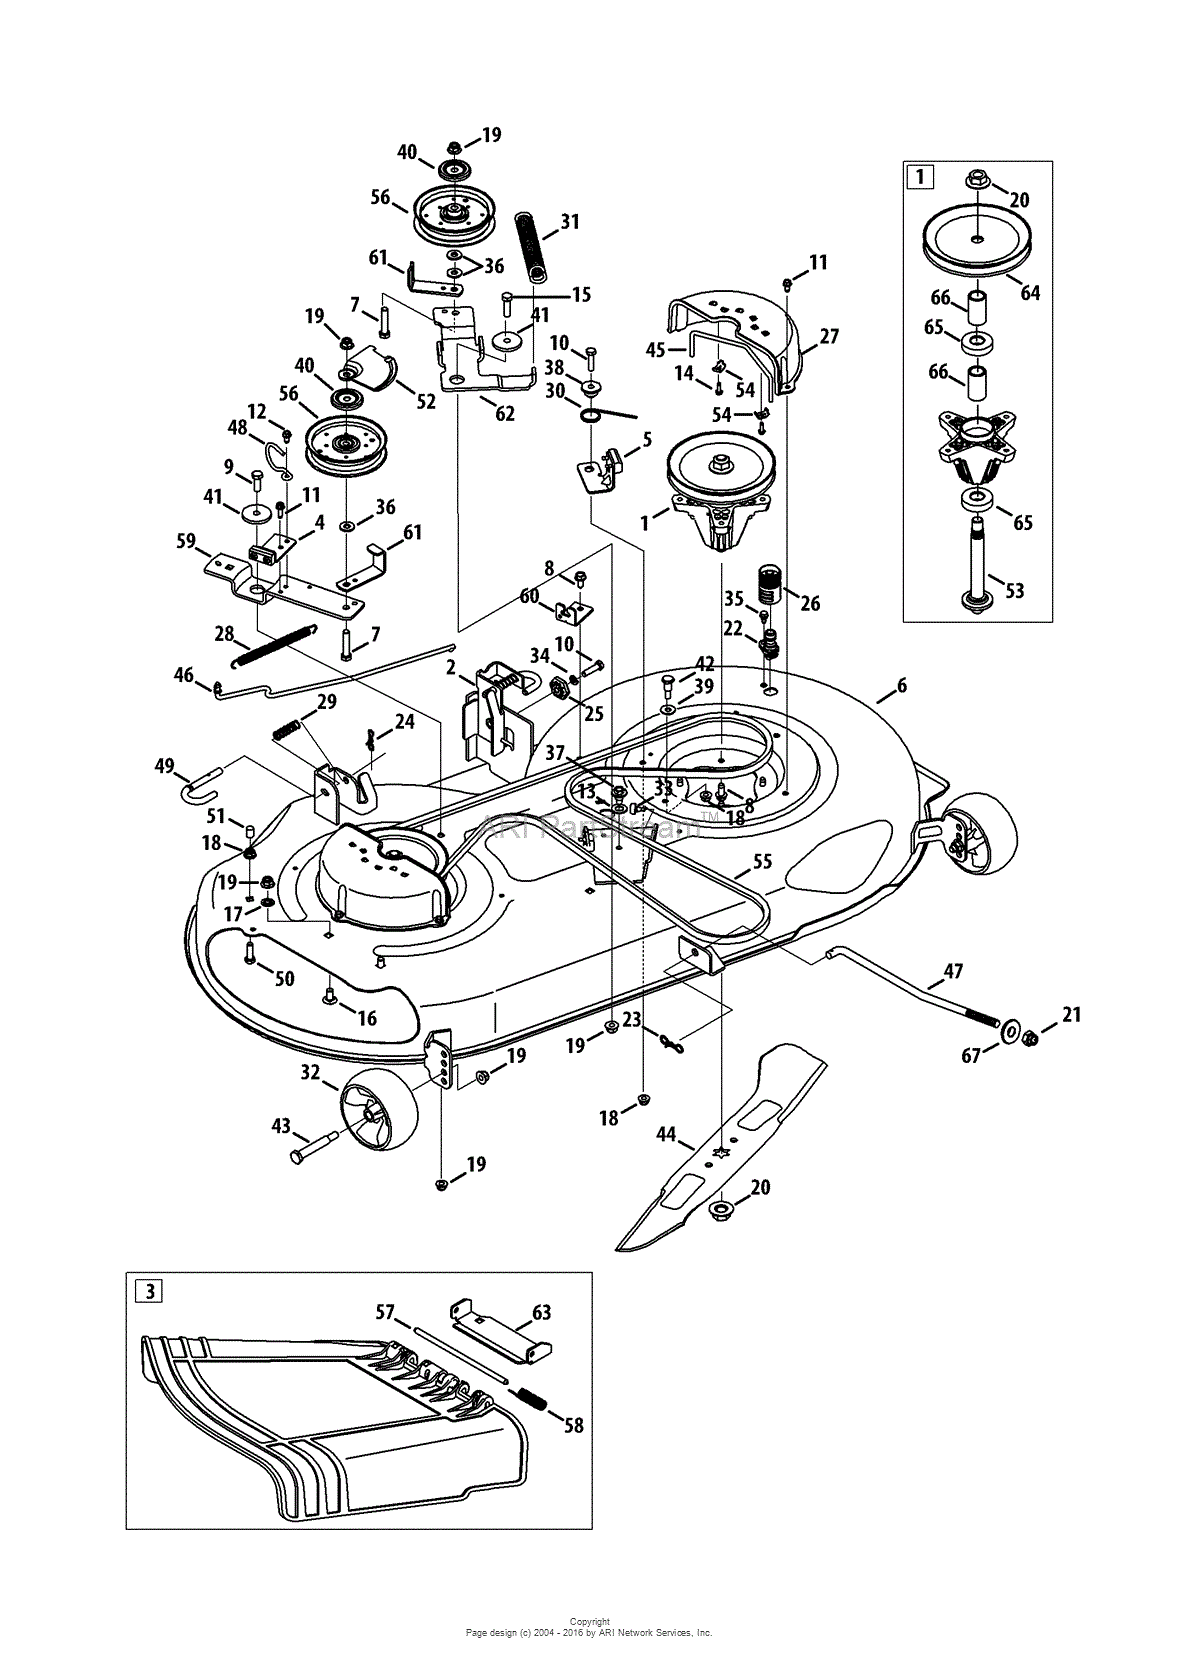 28 Diagram For Craftsman Lawn Mower Deck - Wire Diagram Source Information